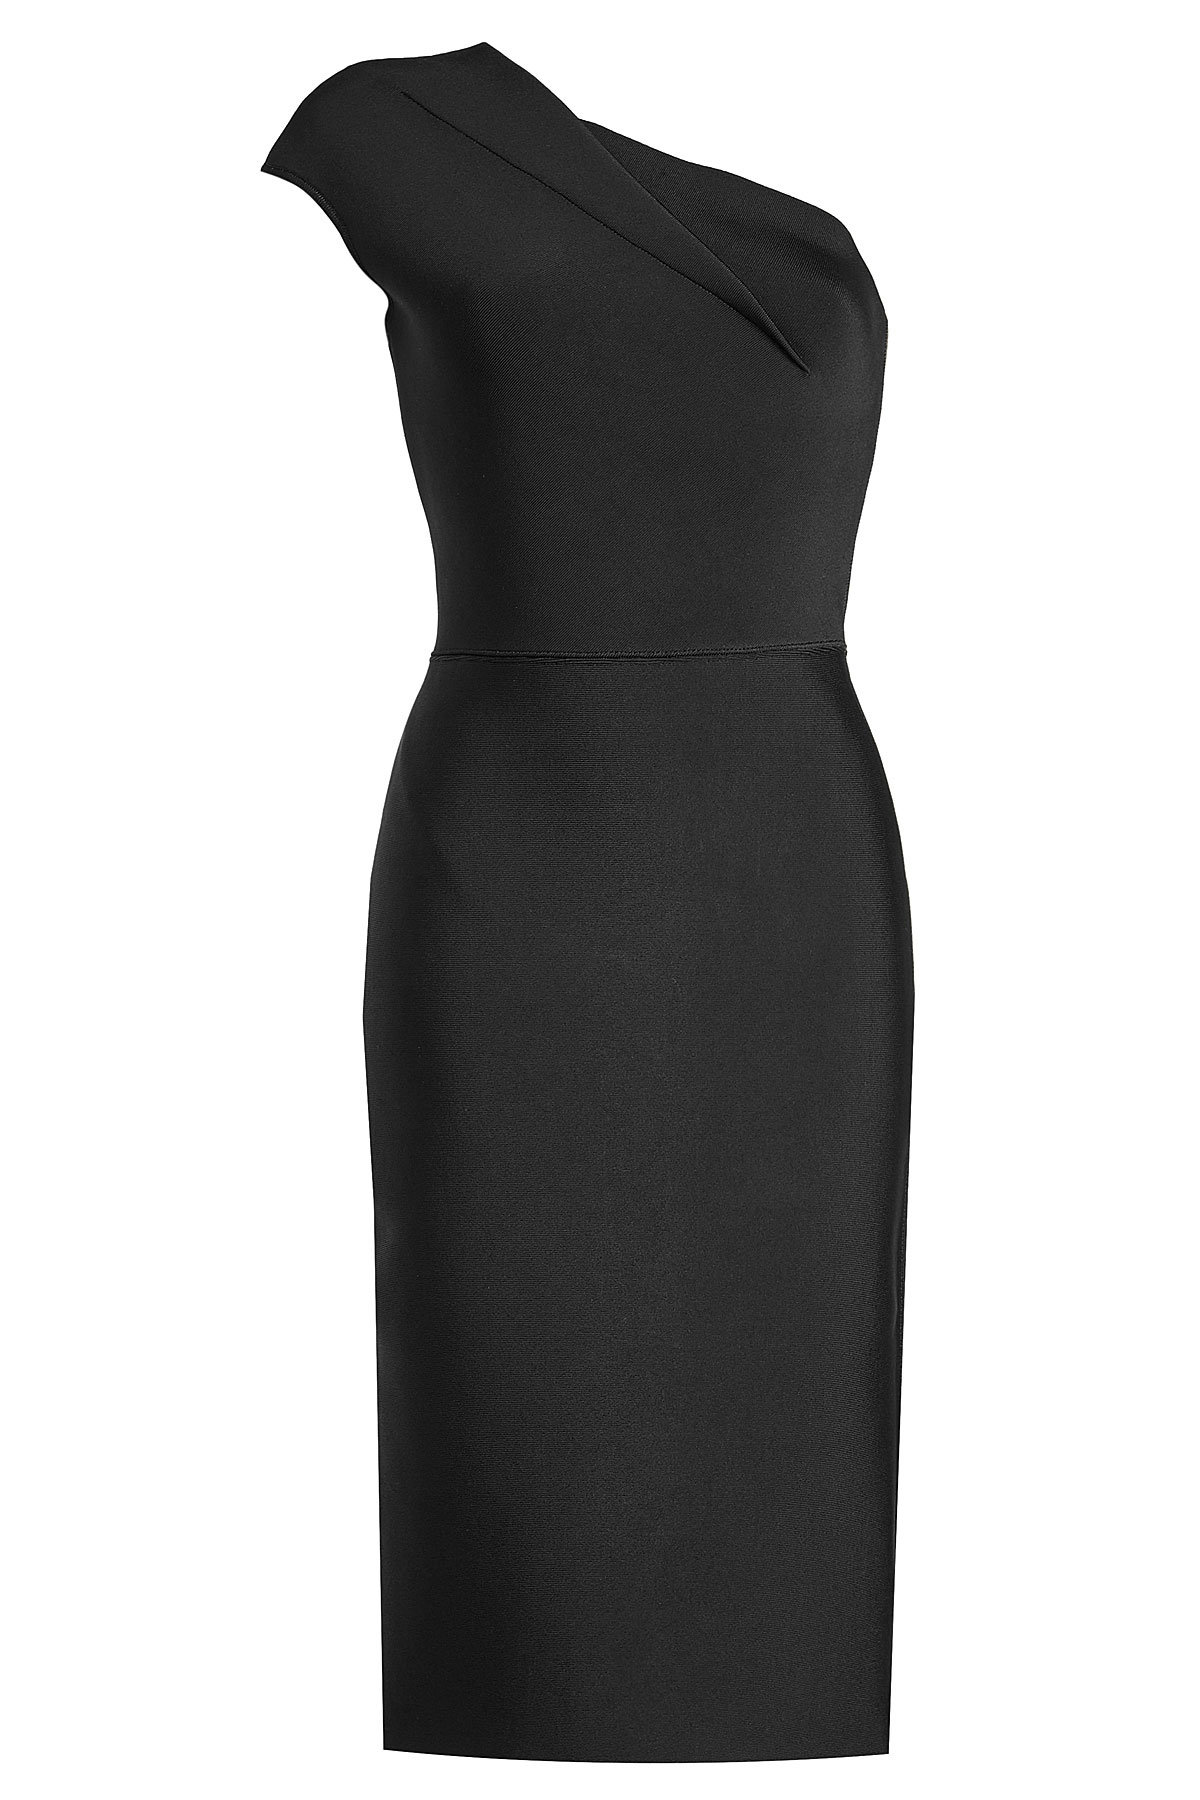 Roland Mouret - One-Shoulder Dress - Black | ABOUT ICONS